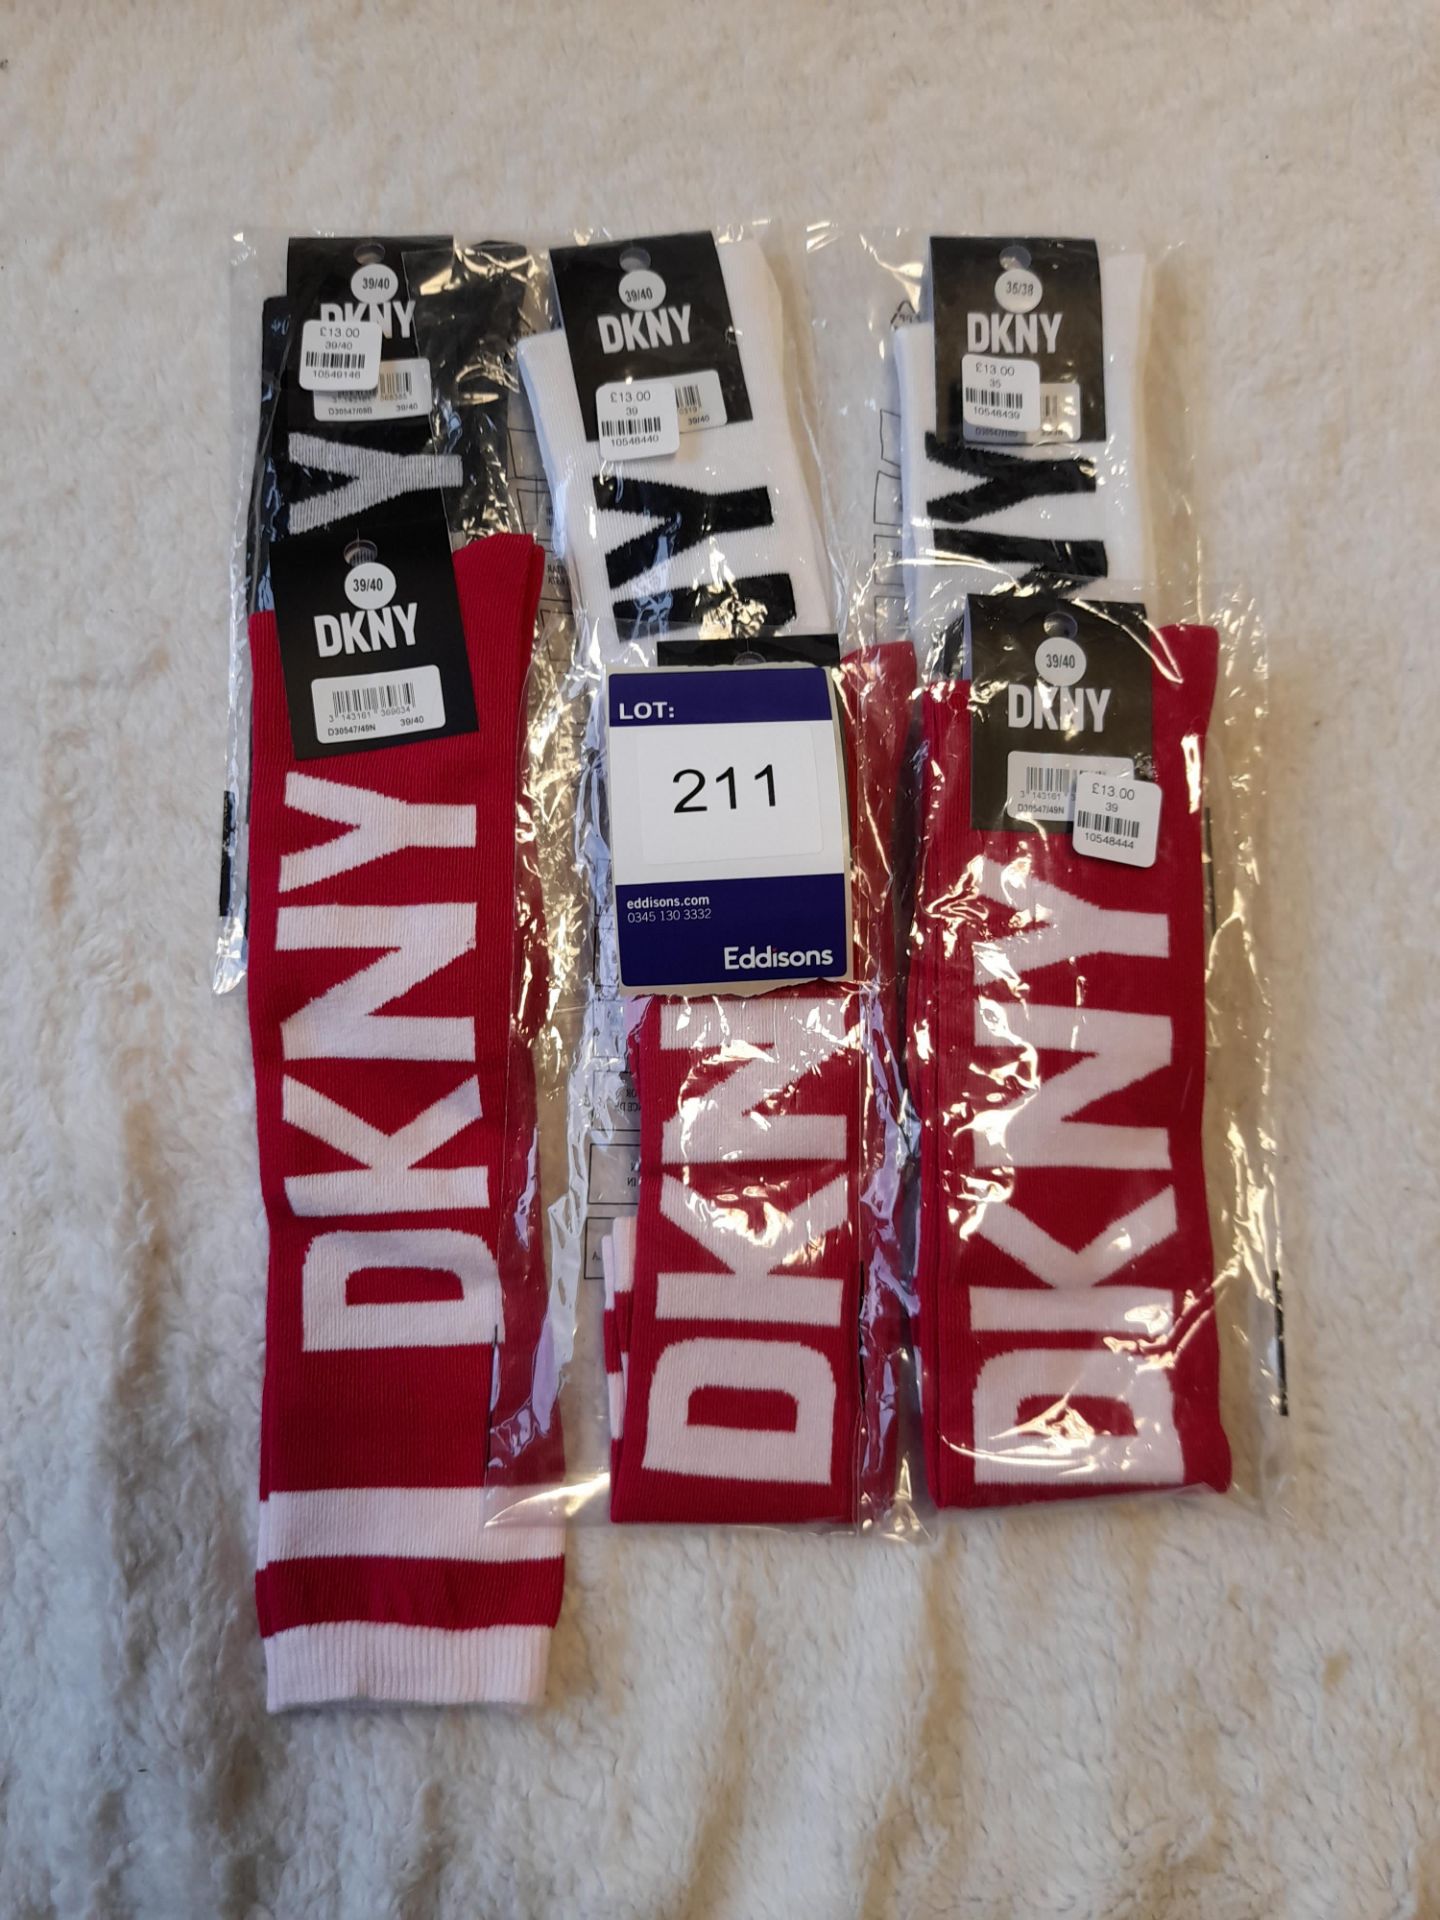 6 x Pairs of DKNY Knee High Socks in black, white